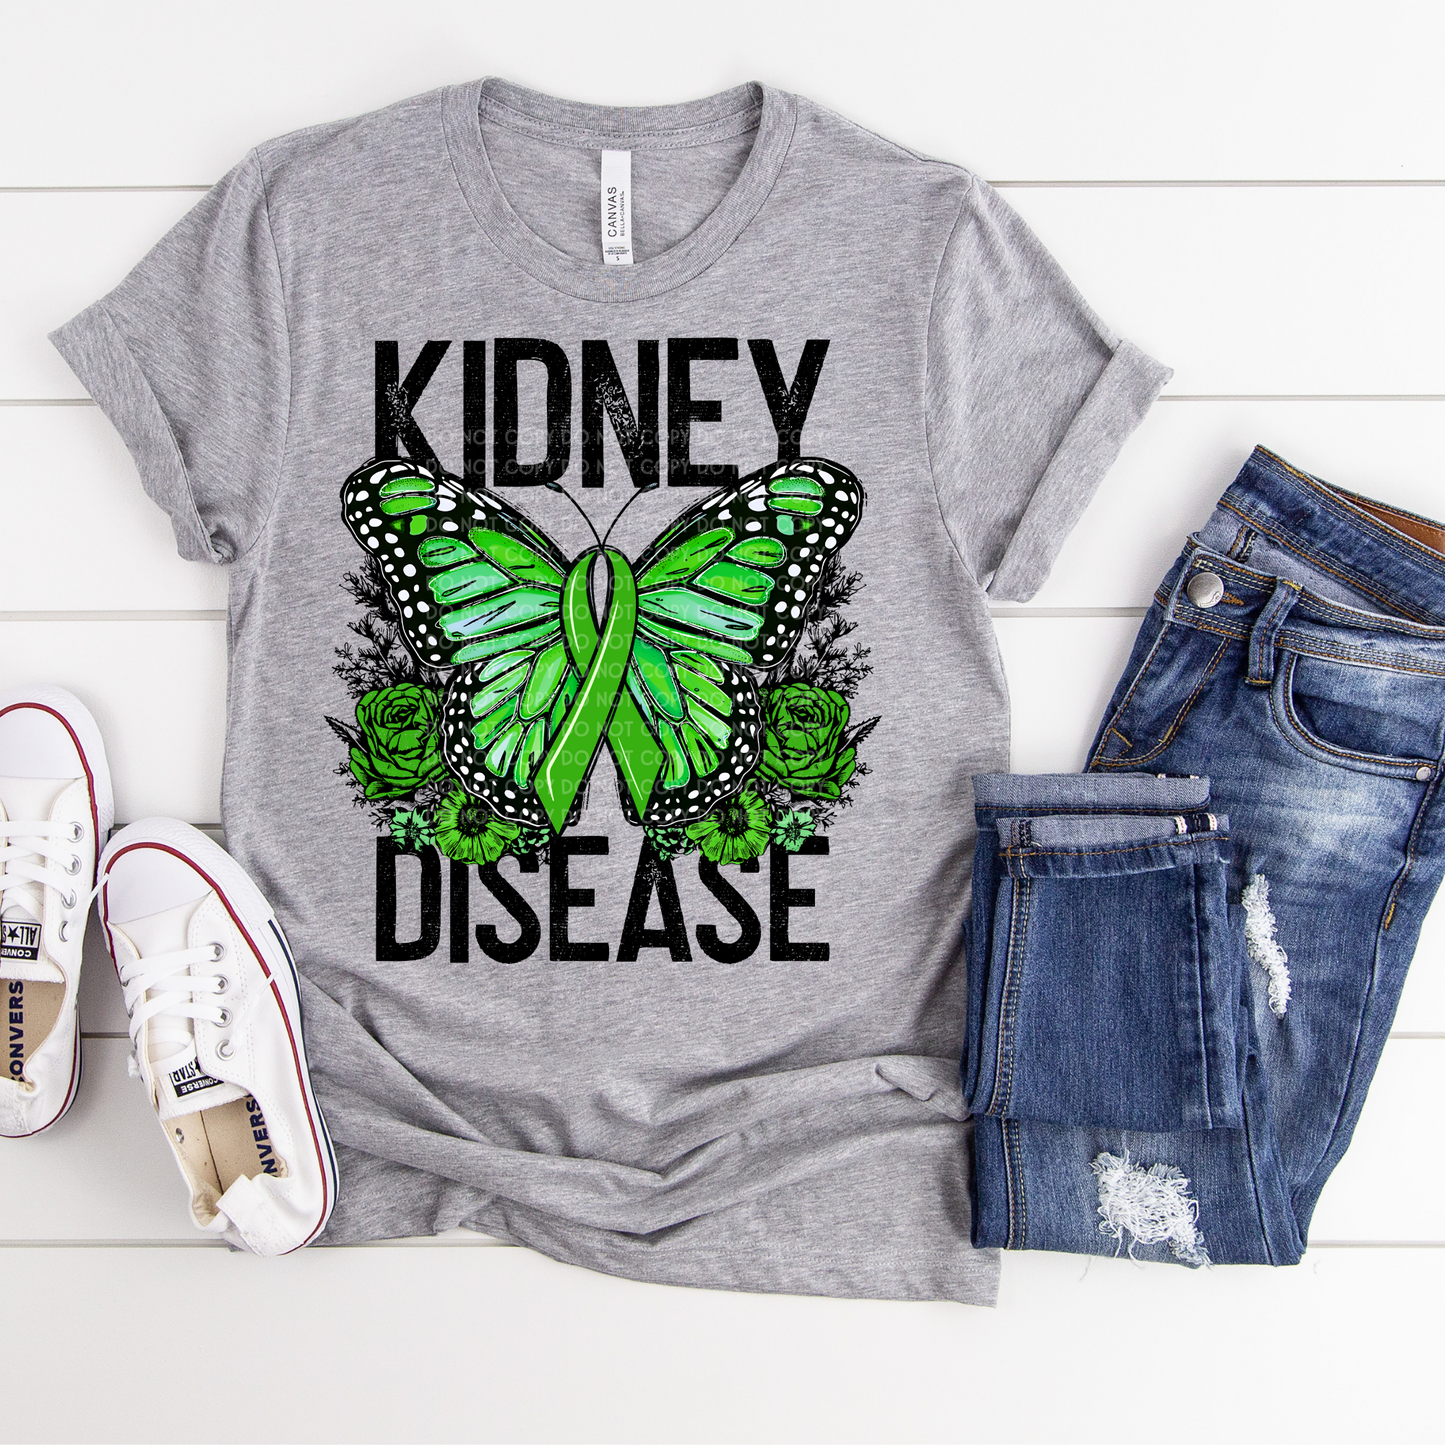 Kidney Disease Awareness - DTF TRANSFER